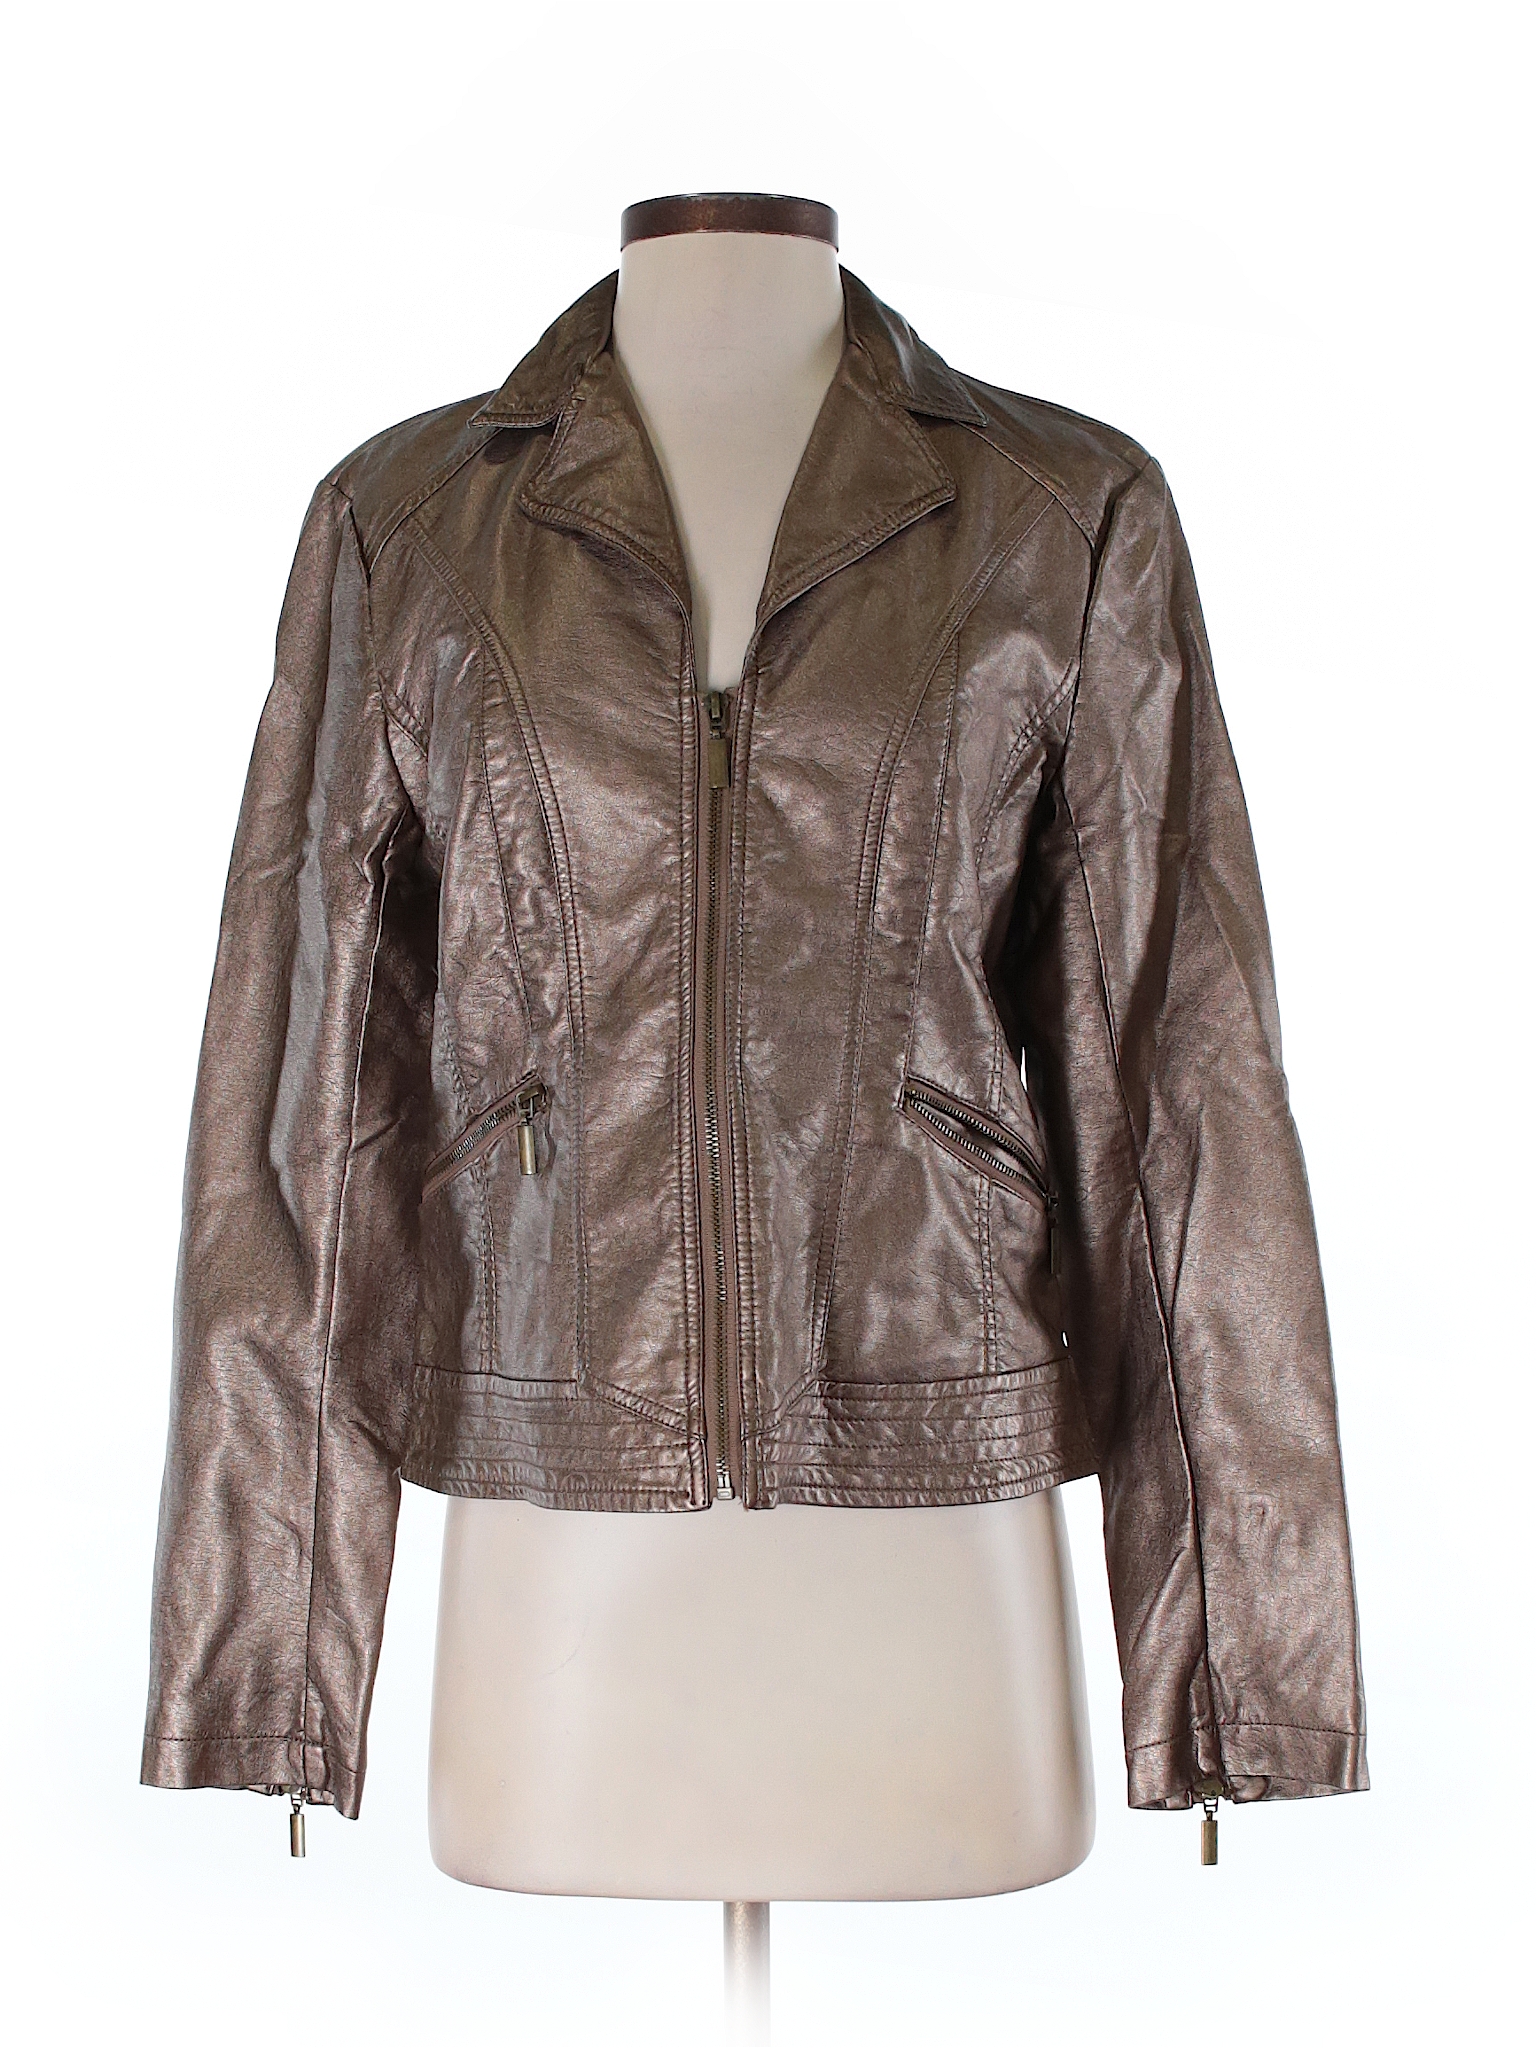 DressBarn 100% Polyurethane Solid Tan Faux Leather Jacket Size S - 98% ...